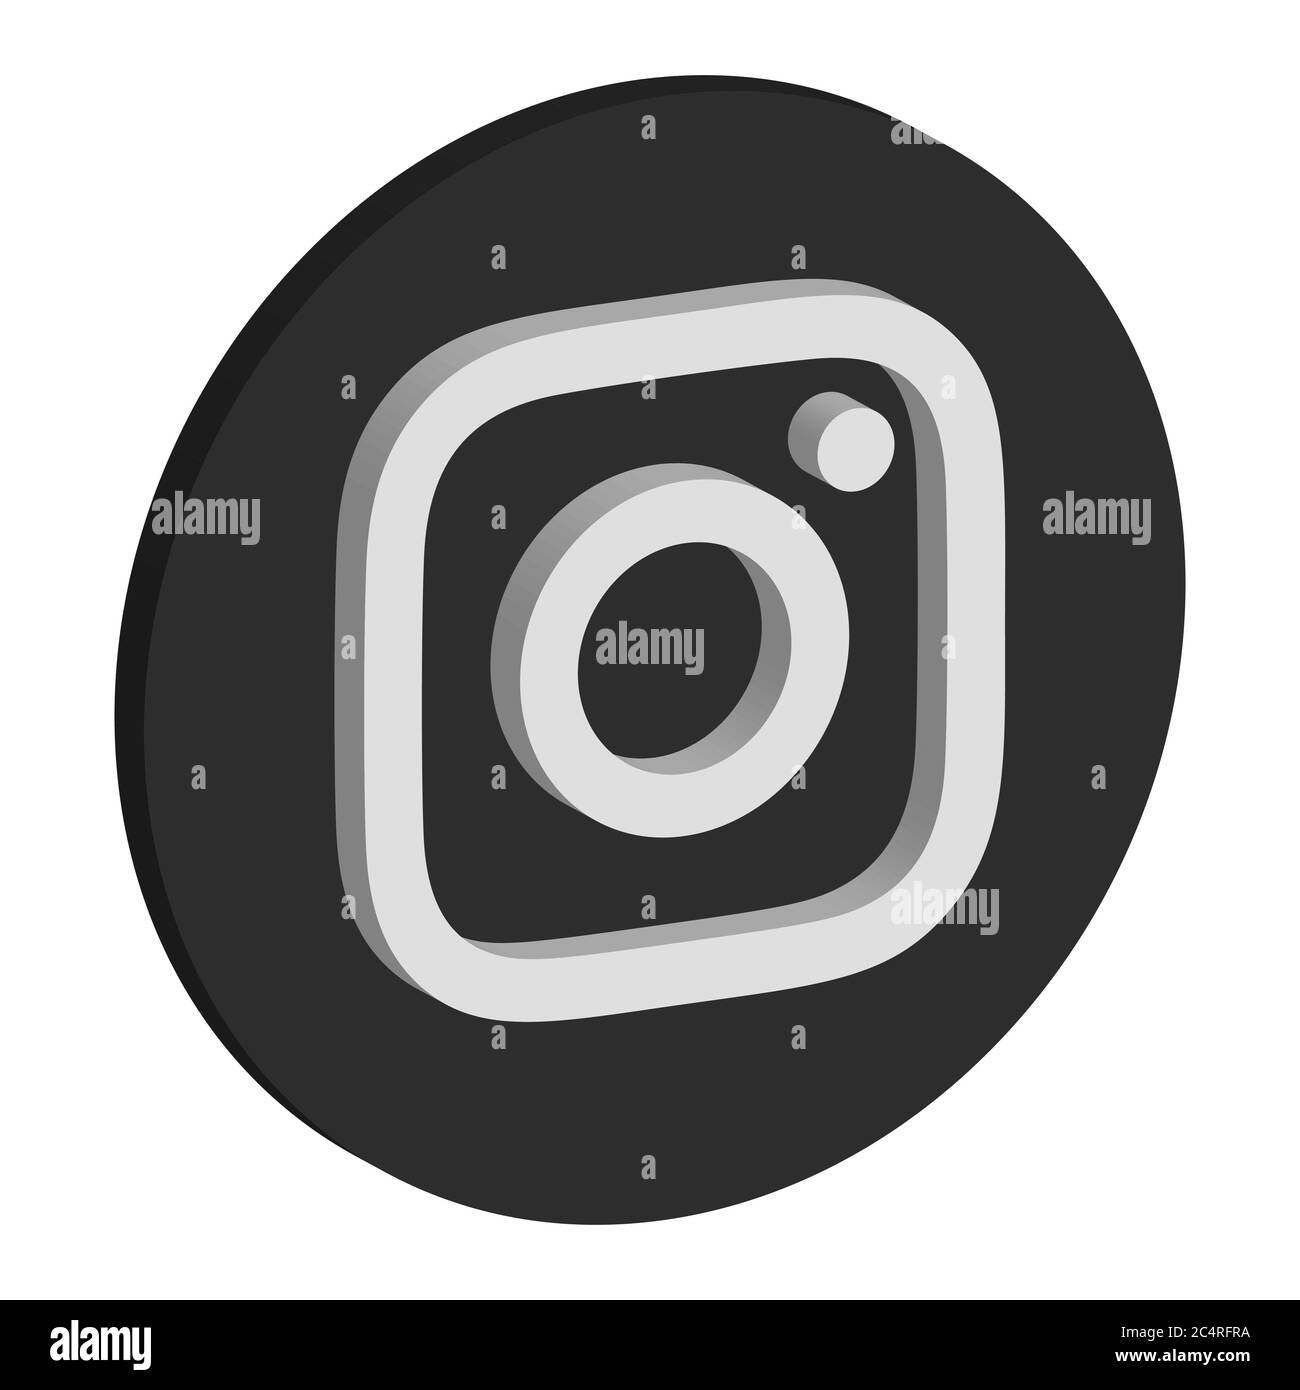 VORONEZH, RUSSIA - NOVEMBER 21, 2019: Instagram logo isometric round icon in black color Stock Vector